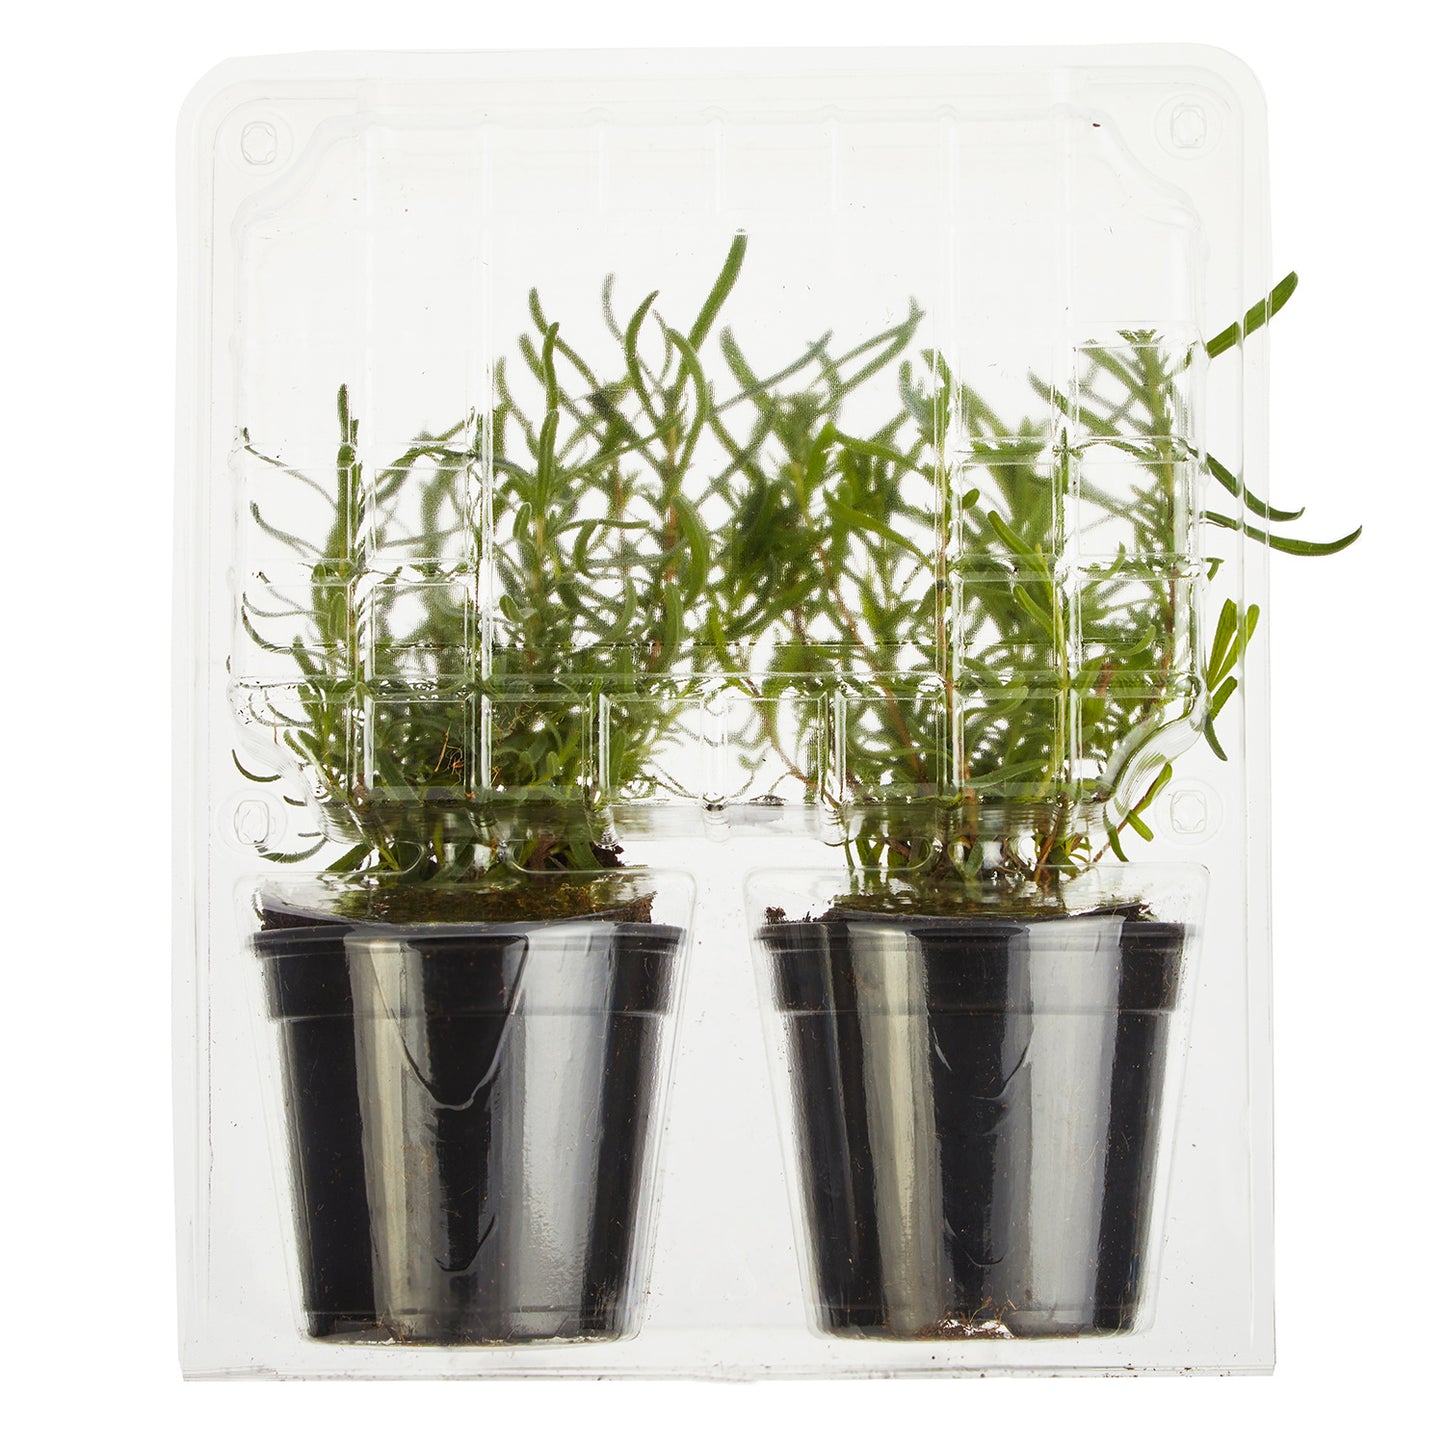 Lavender Munstead Plantlings Live Baby Plants 4in. Pot, 2-Pack